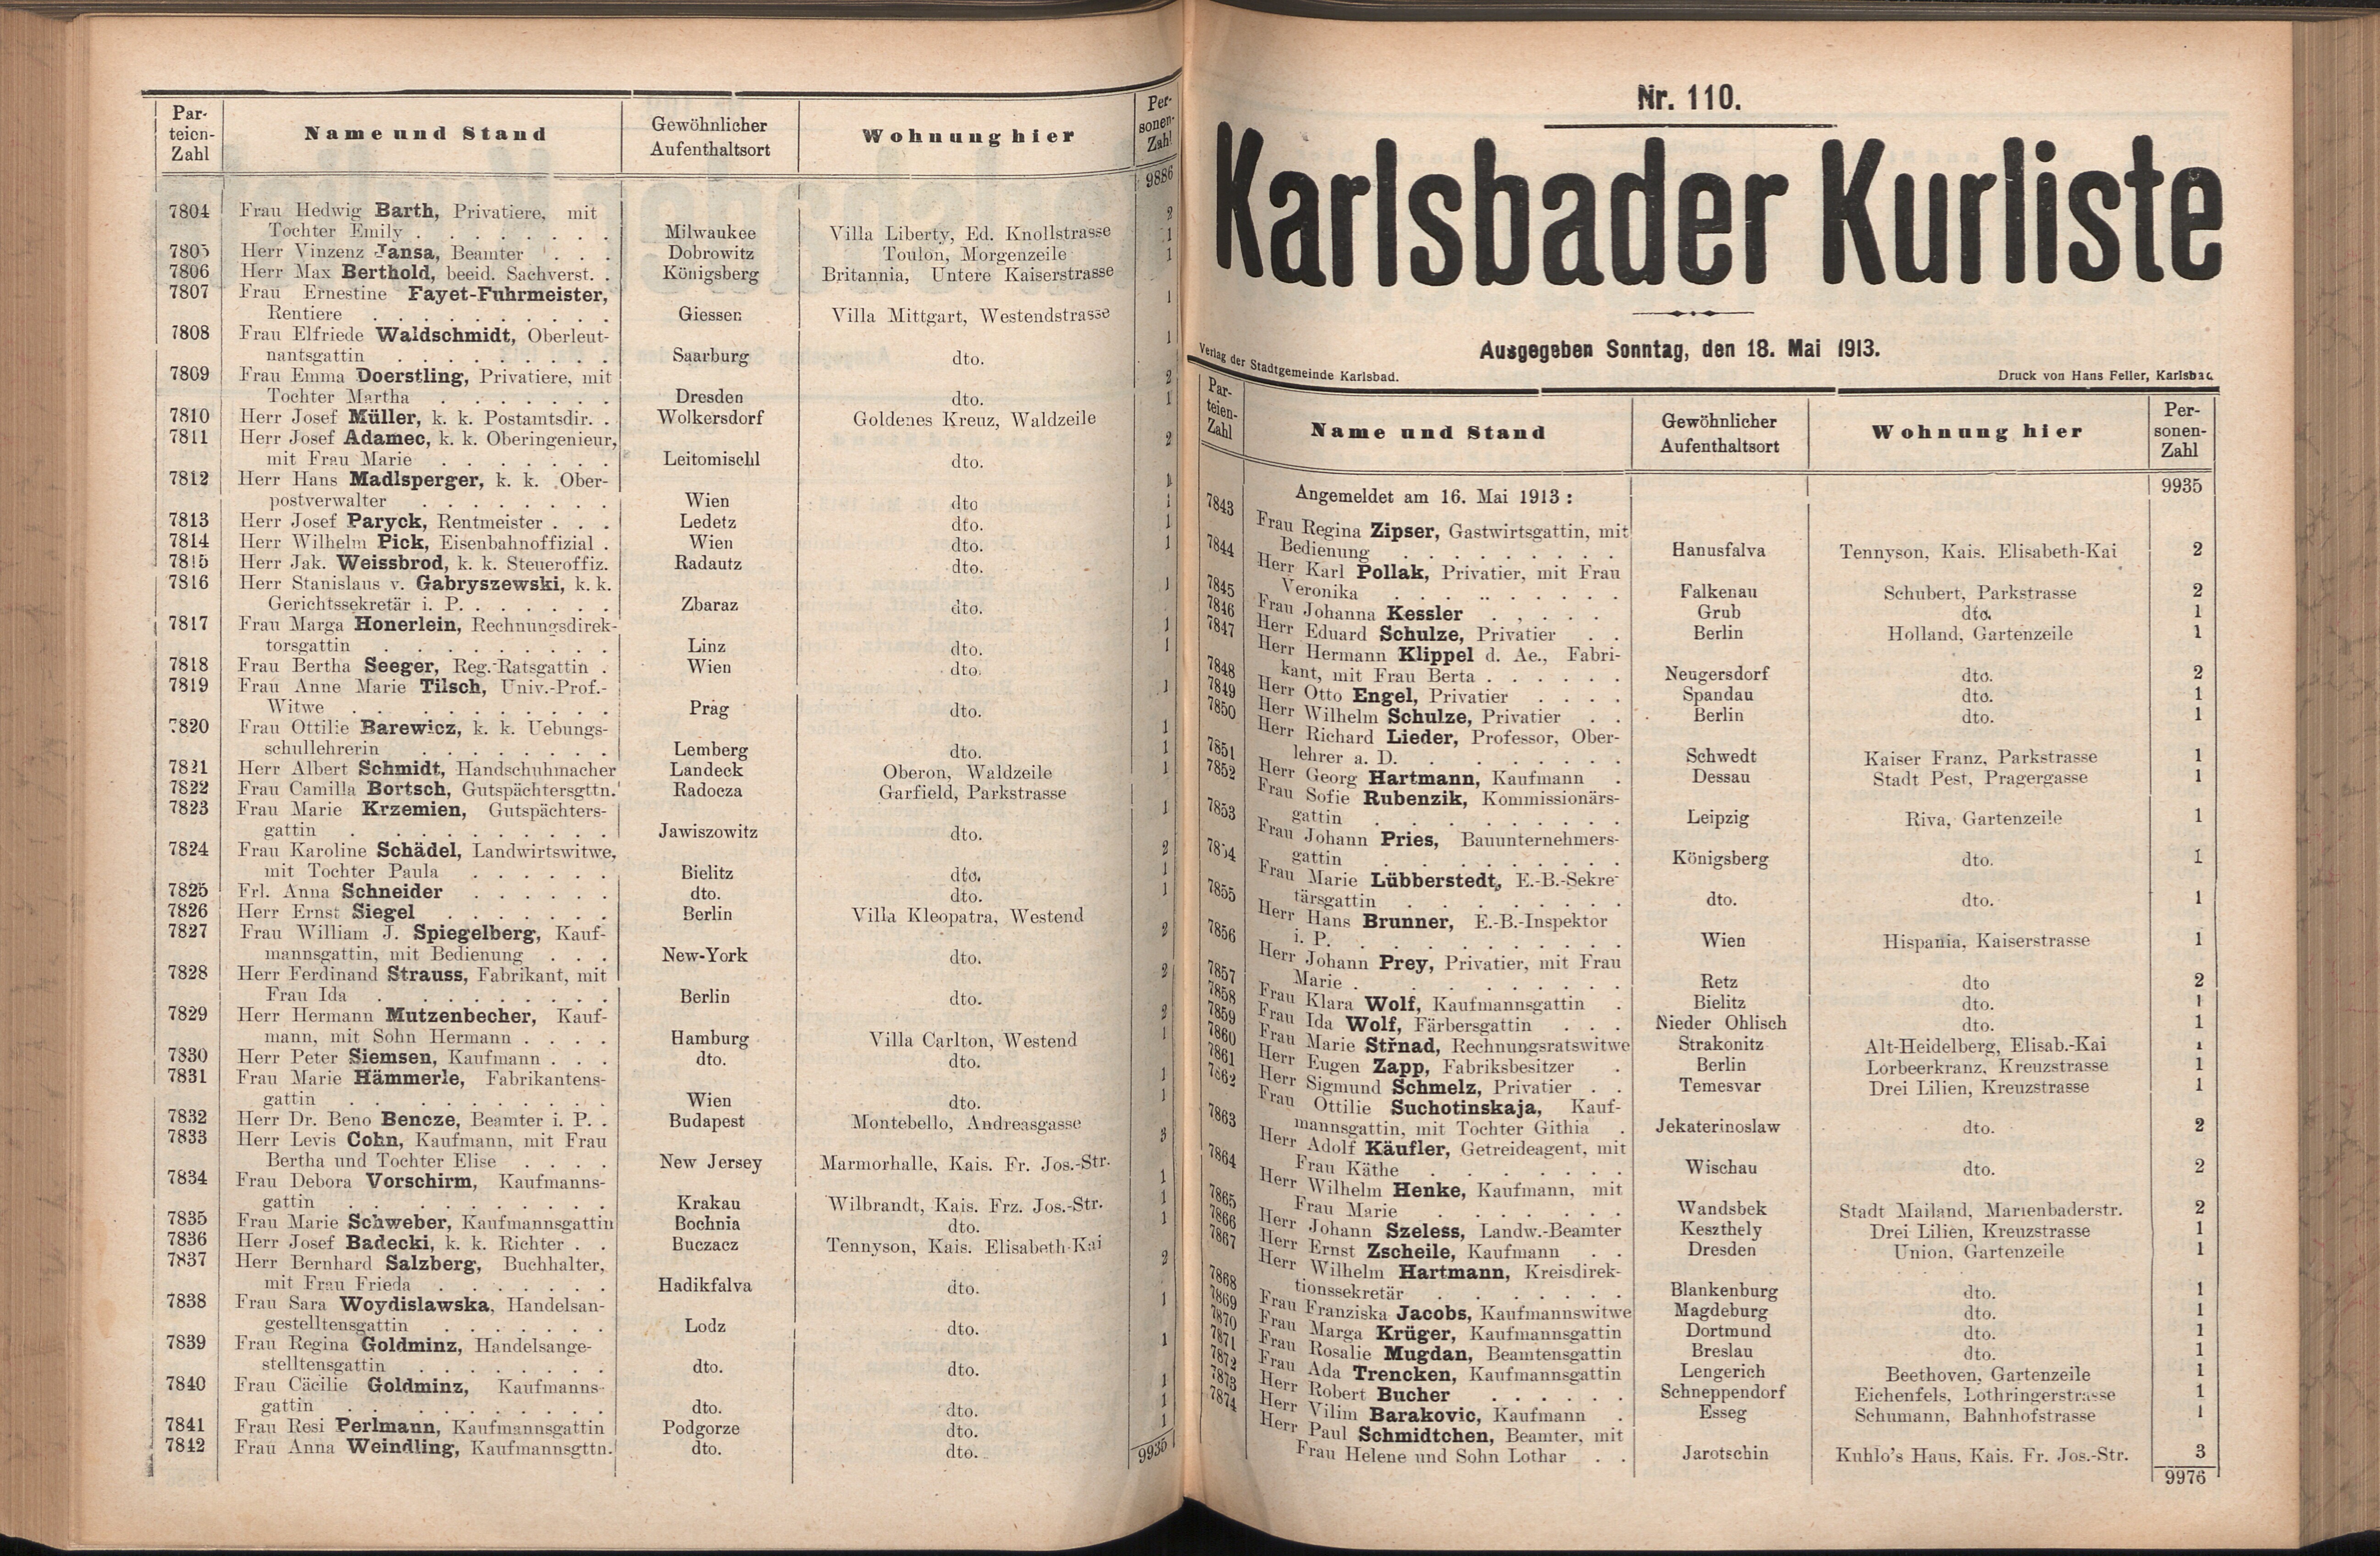 162. soap-kv_knihovna_karlsbader-kurliste-1913-1_1620